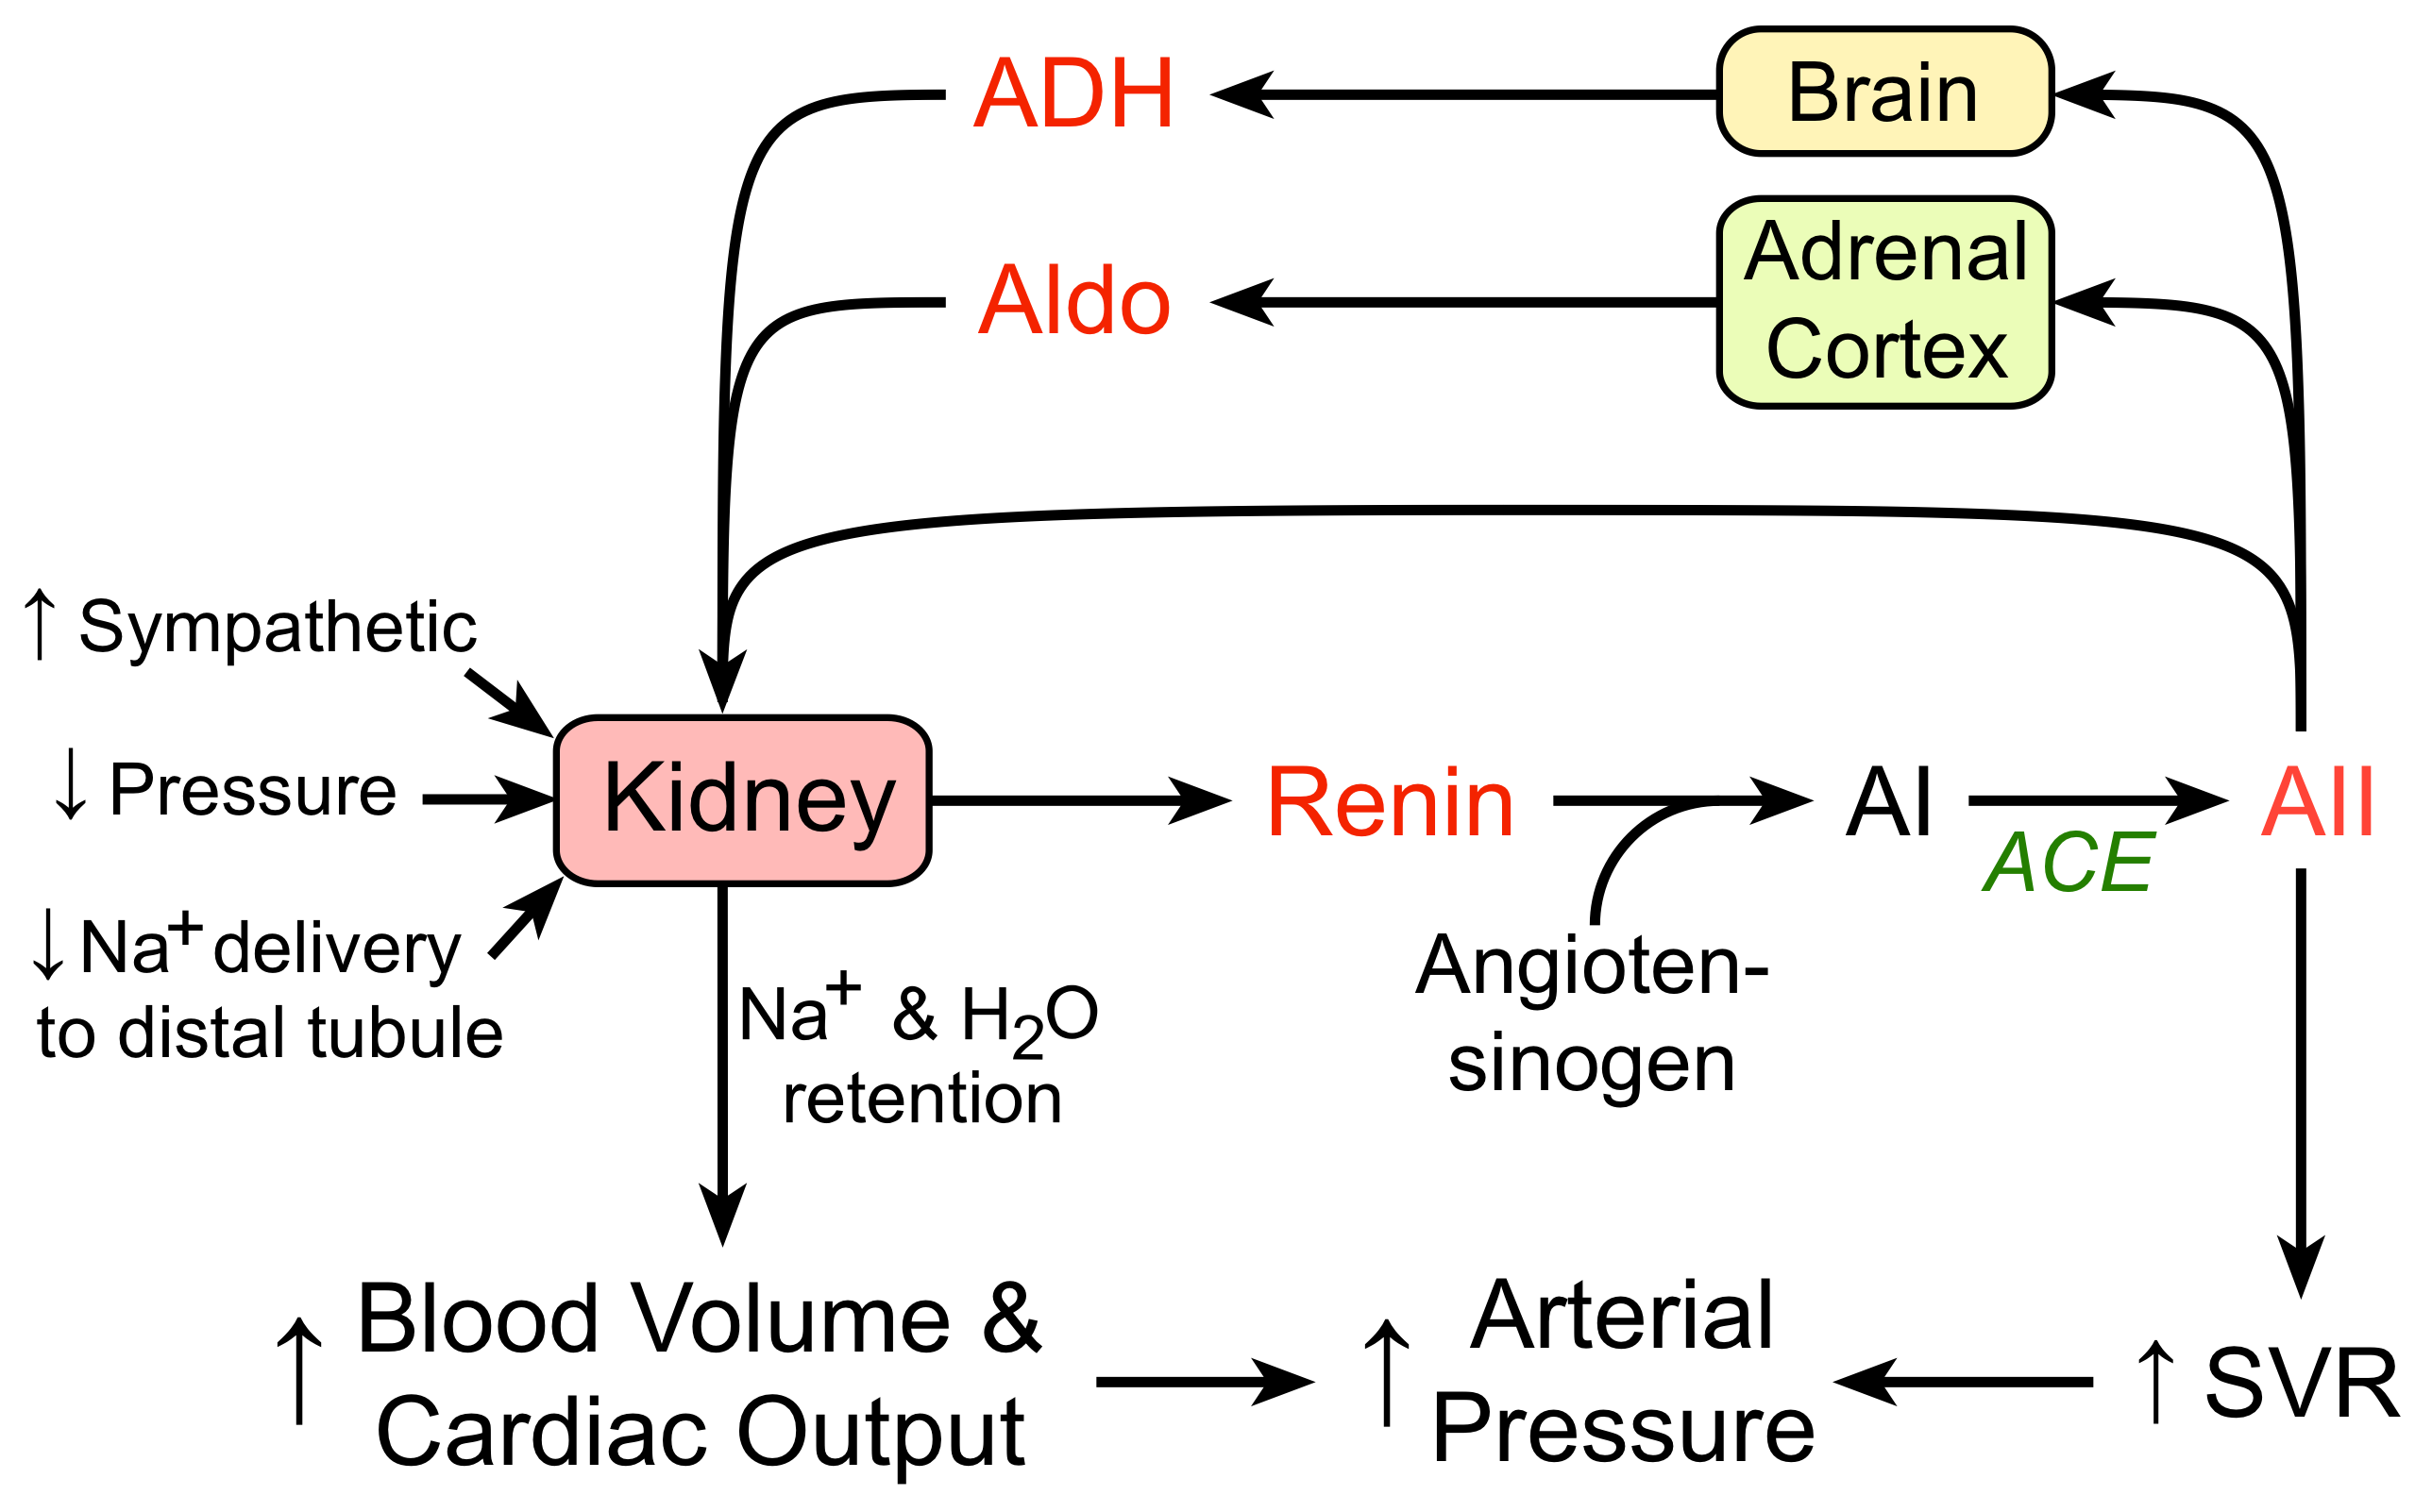 renin-angiotensin-aldosterone system regulating arterial pressure